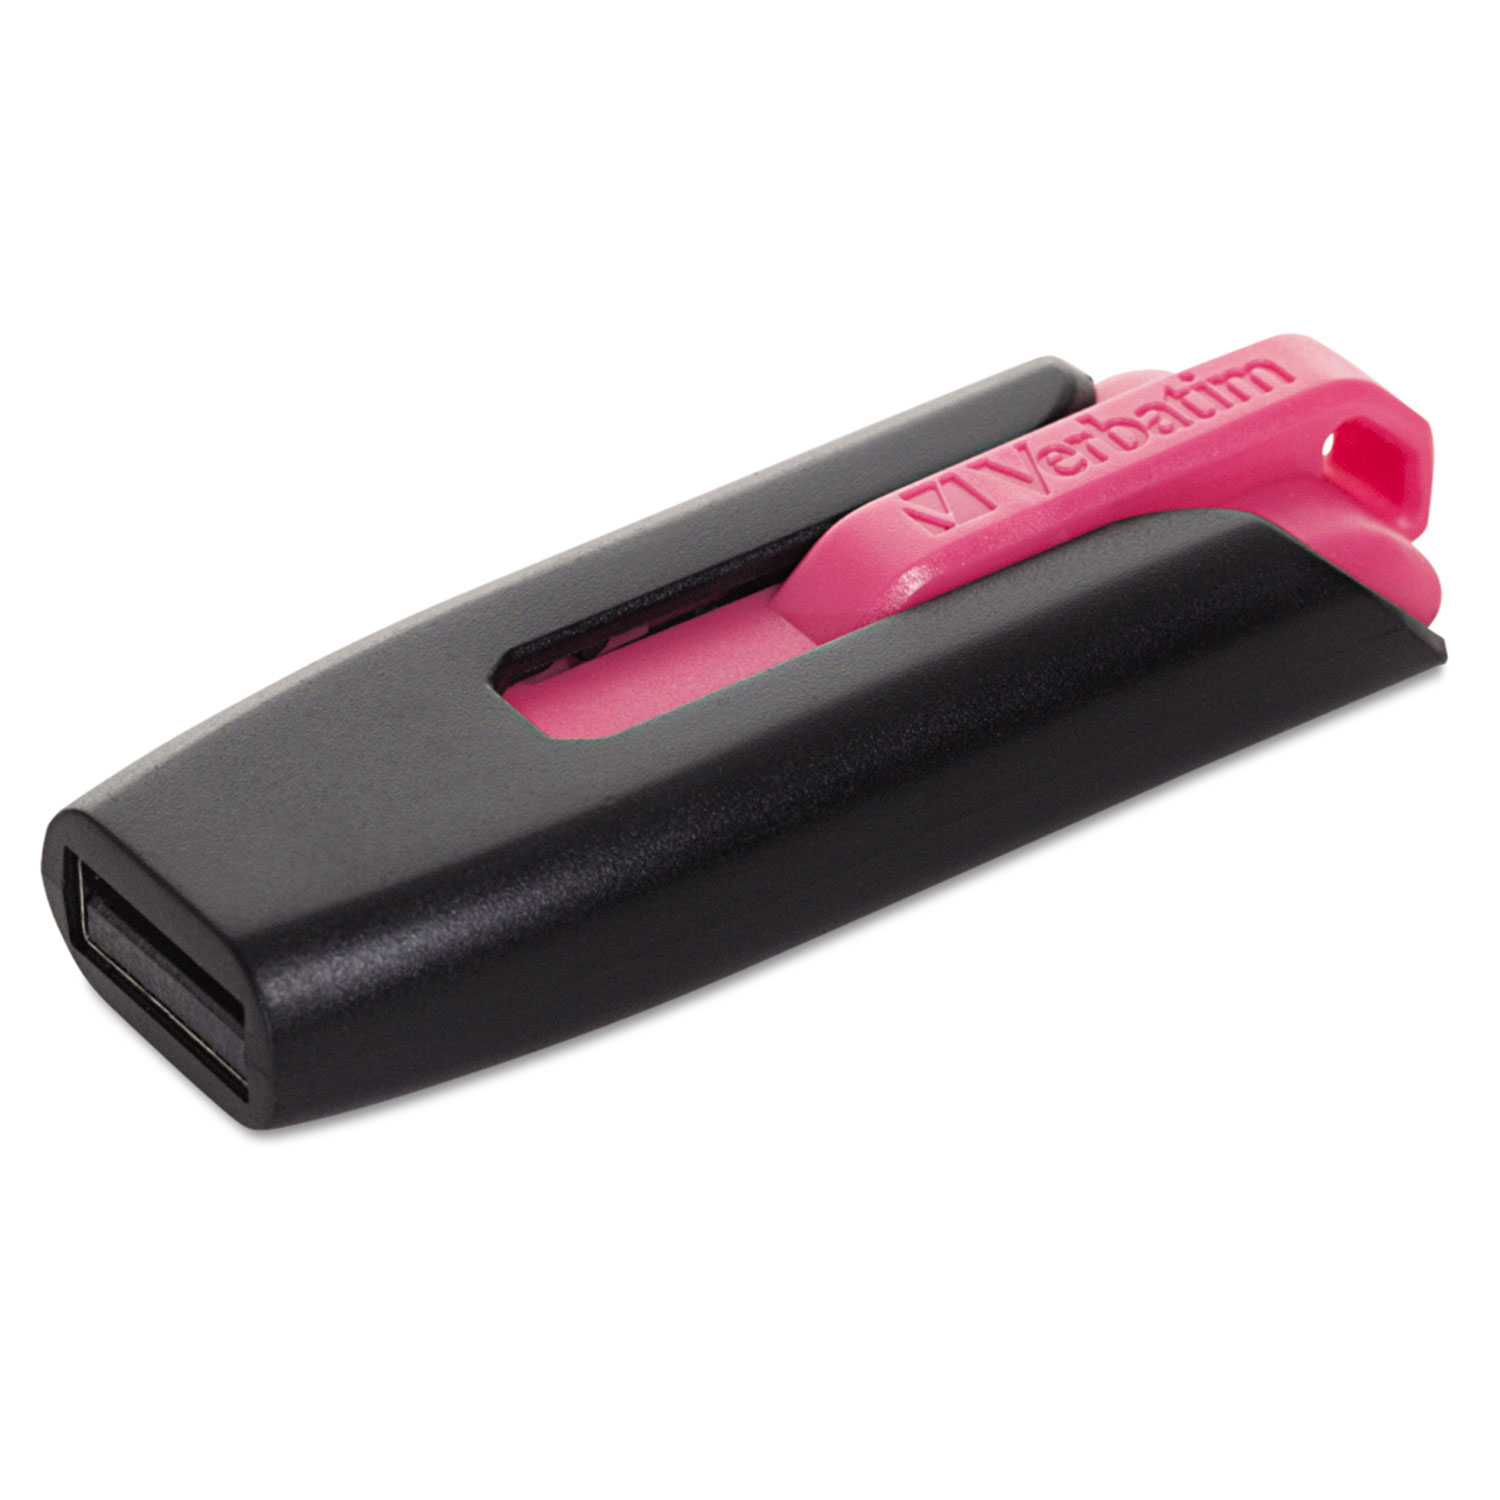 Store n Go V3 USB 3.0 Drive, 16GB, Black/Hot Pink